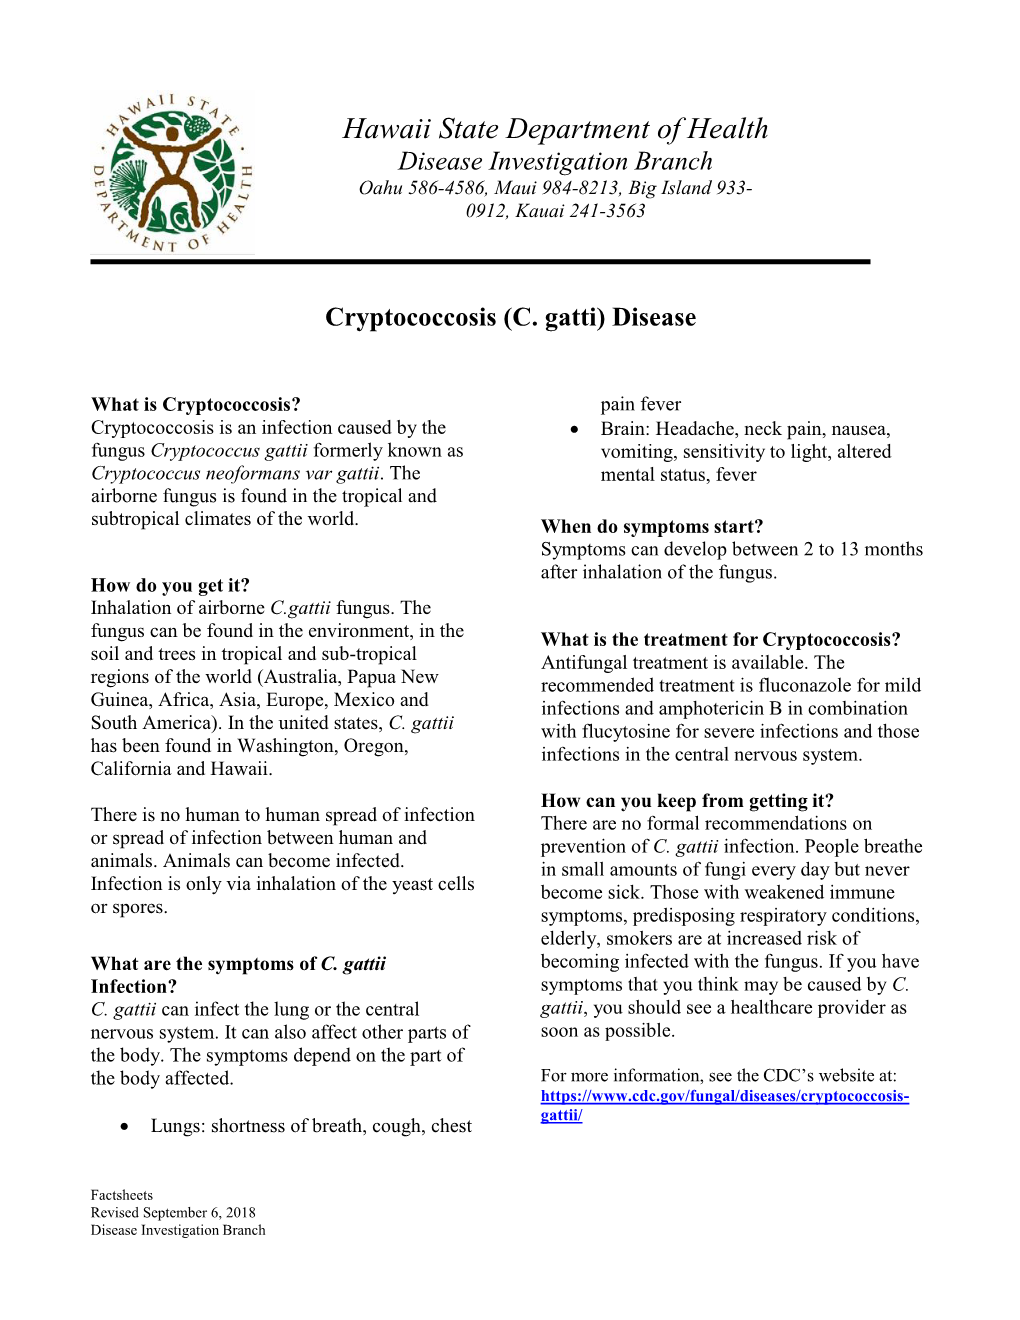 Cryptococcosis Factsheet